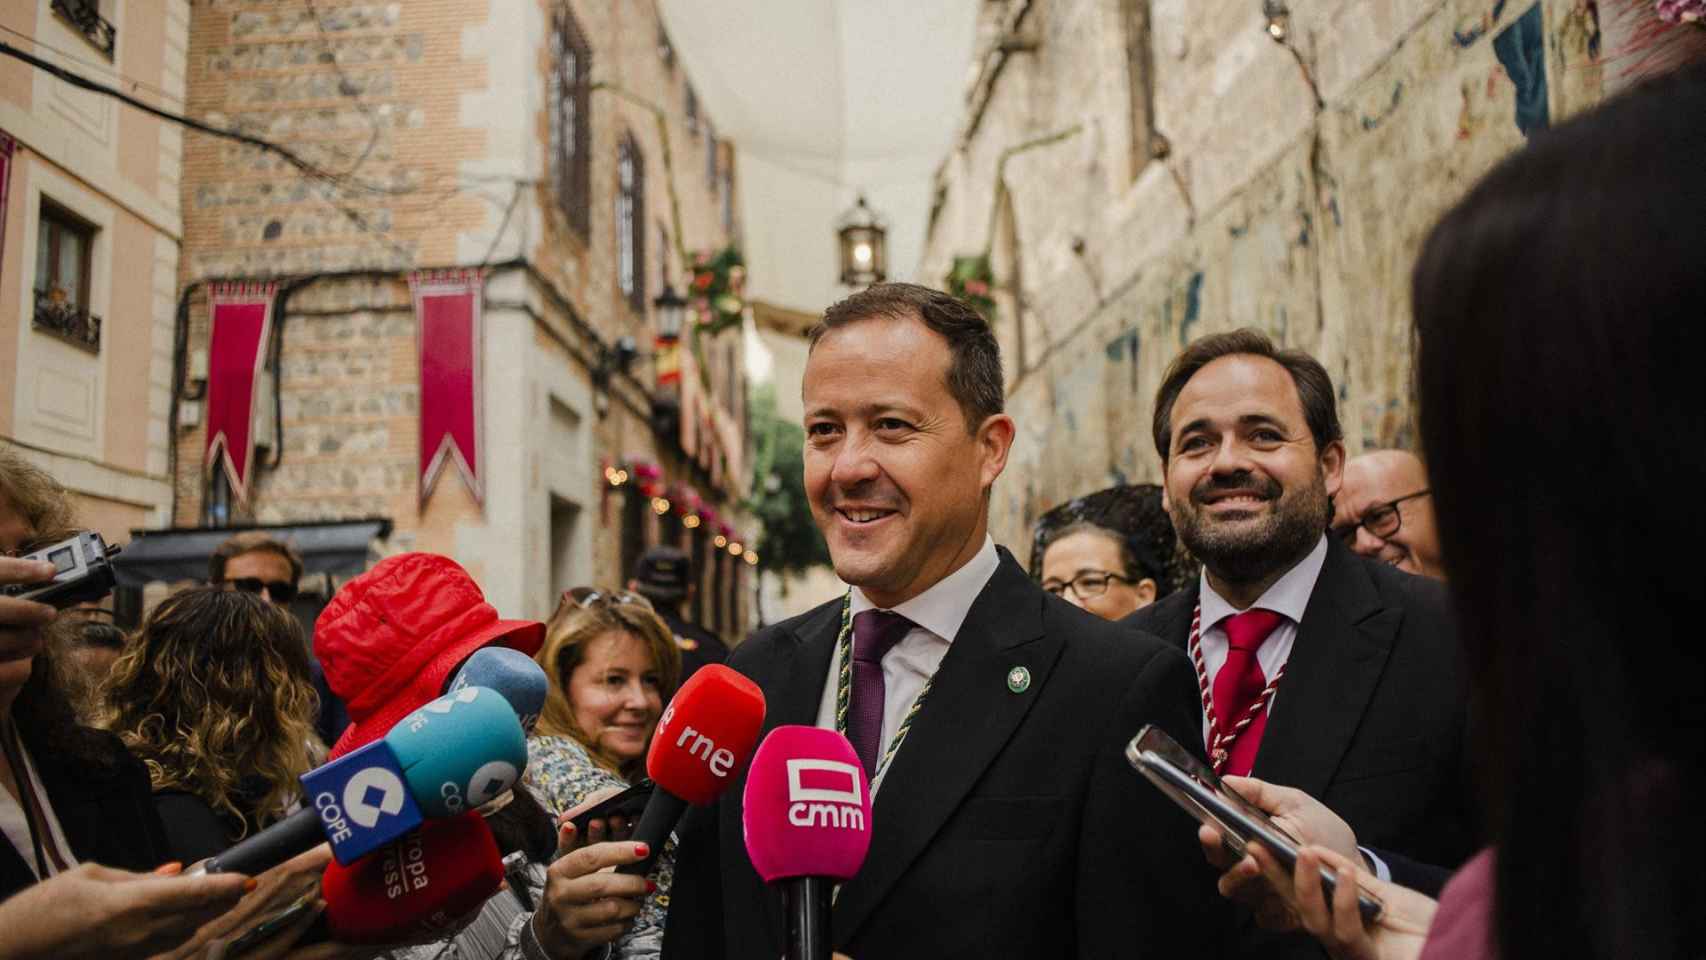 Carlos Velázquez, previsible futuro alcalde 'popular' de Toledo. Foto: Mateo Lanzuela / Europa Press.